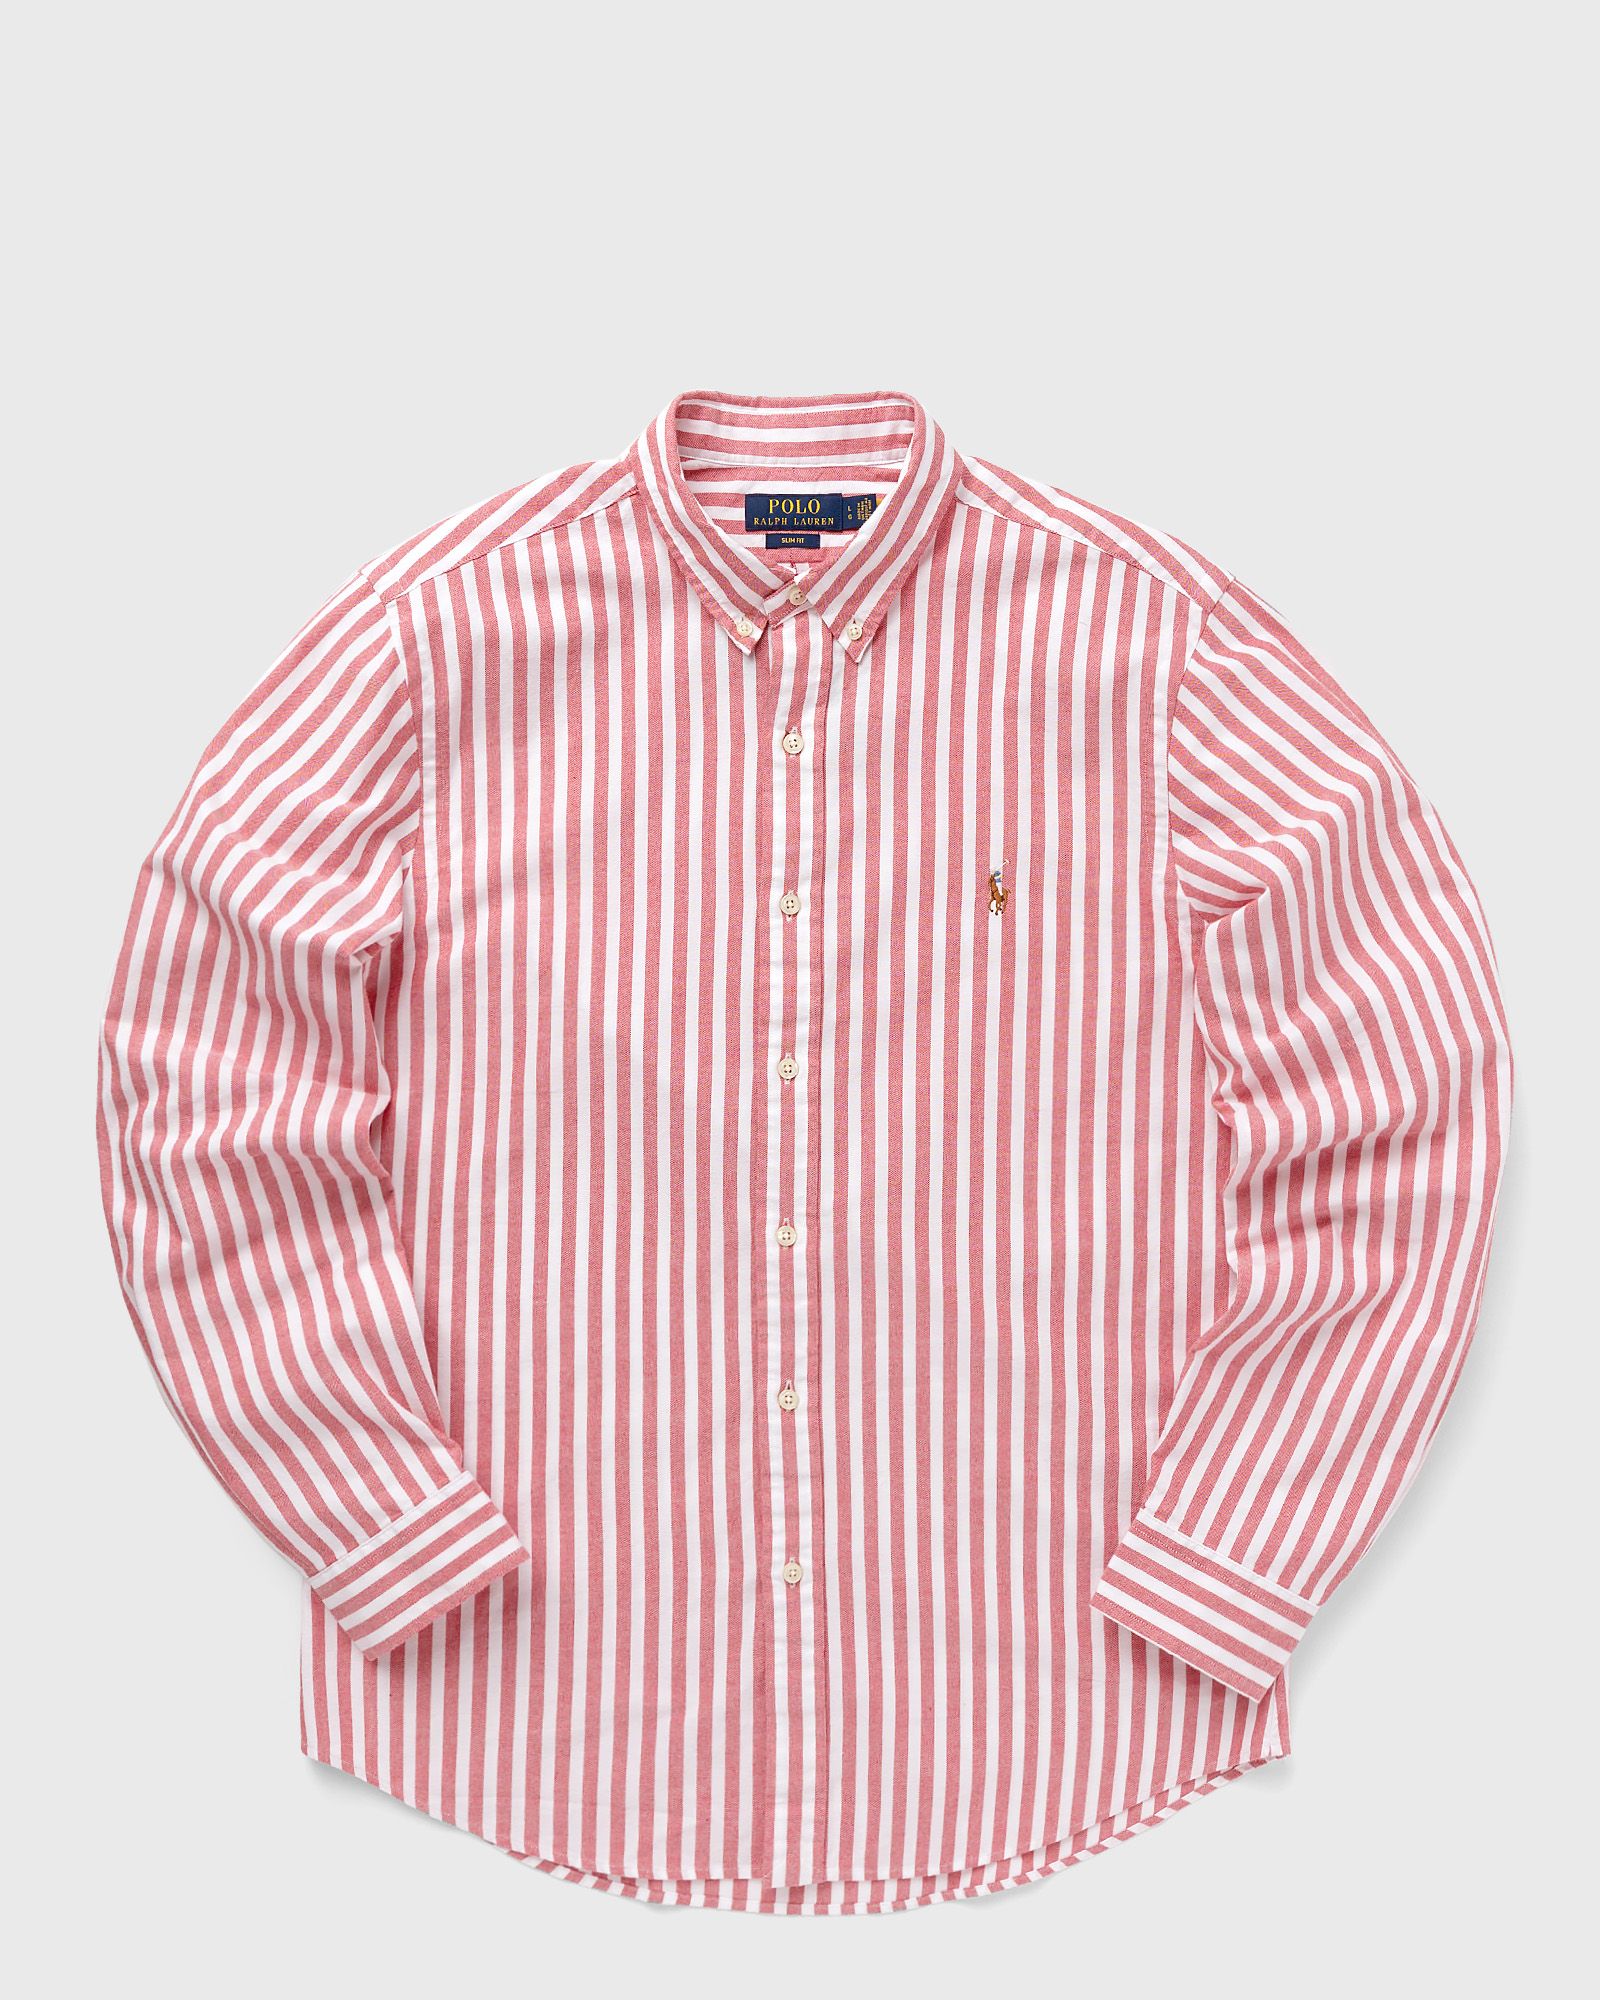 Polo Ralph Lauren - long sleeve-sport shirt men longsleeves red|white in größe:s